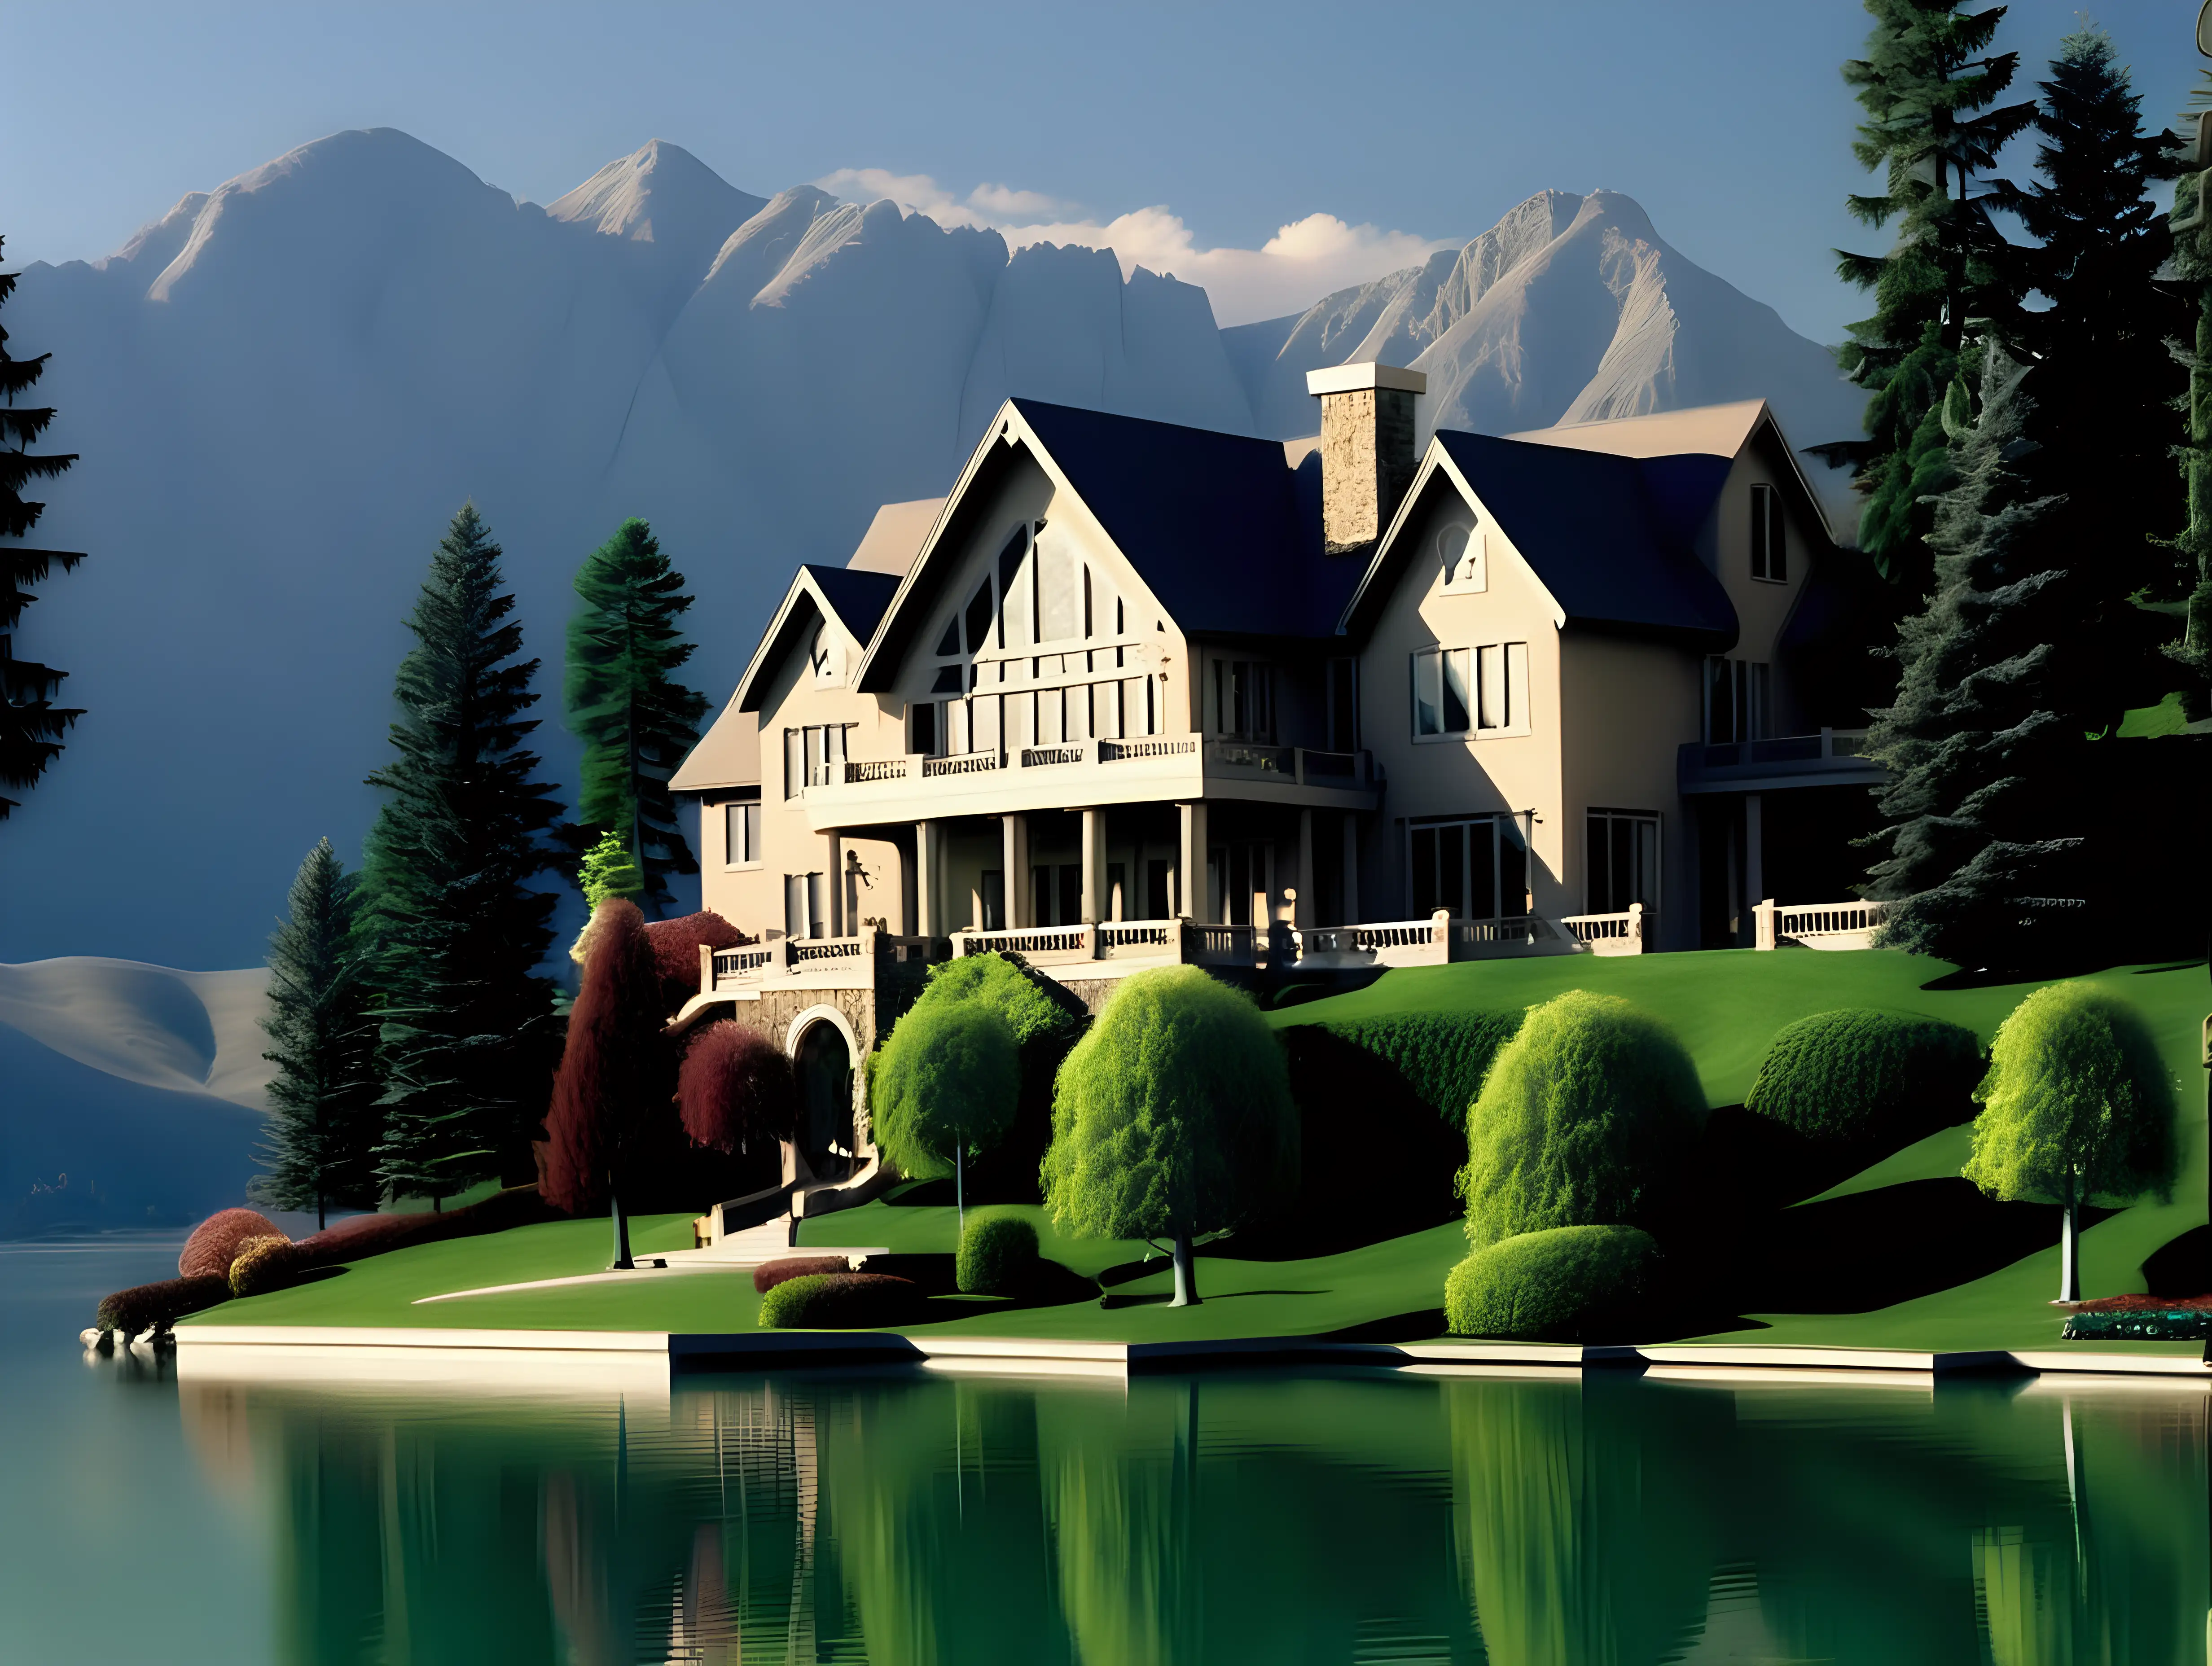 large house, mountains, trees, lake